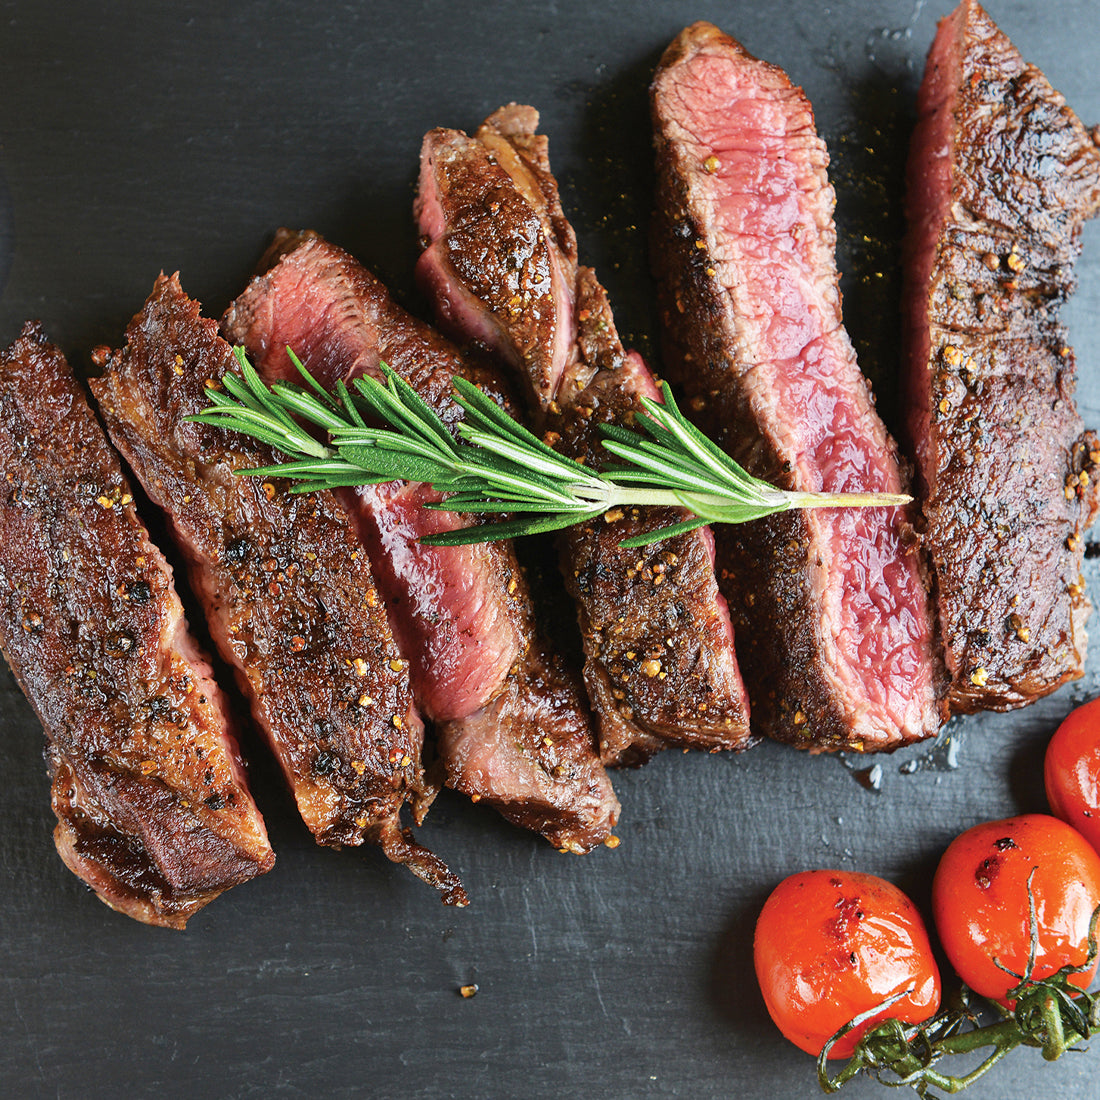 Steak with seasoning on it.